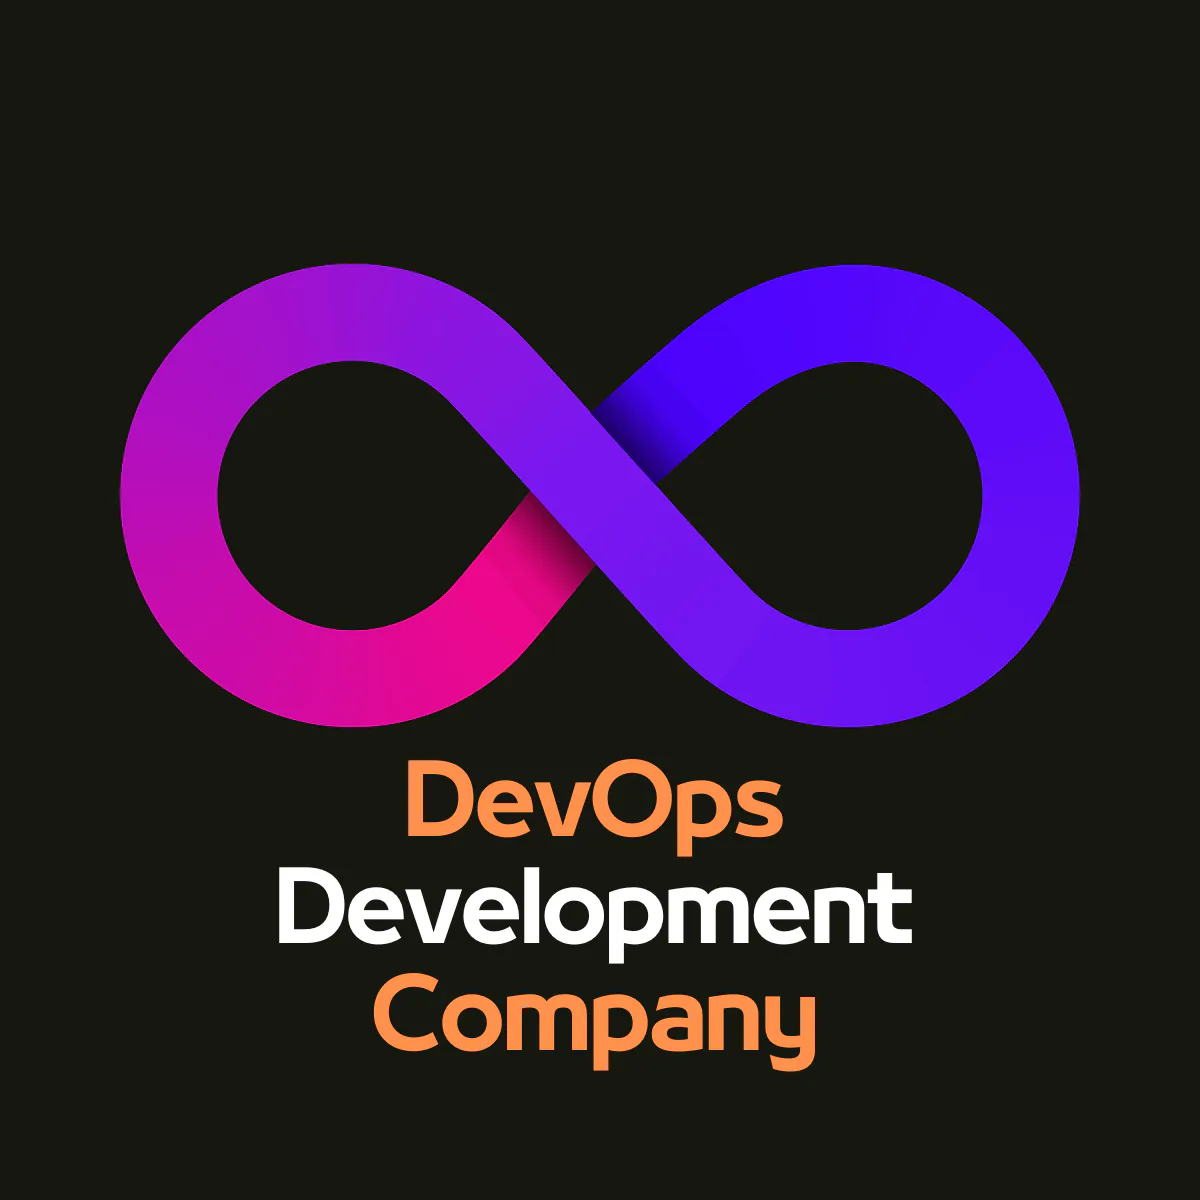 DevOps Development